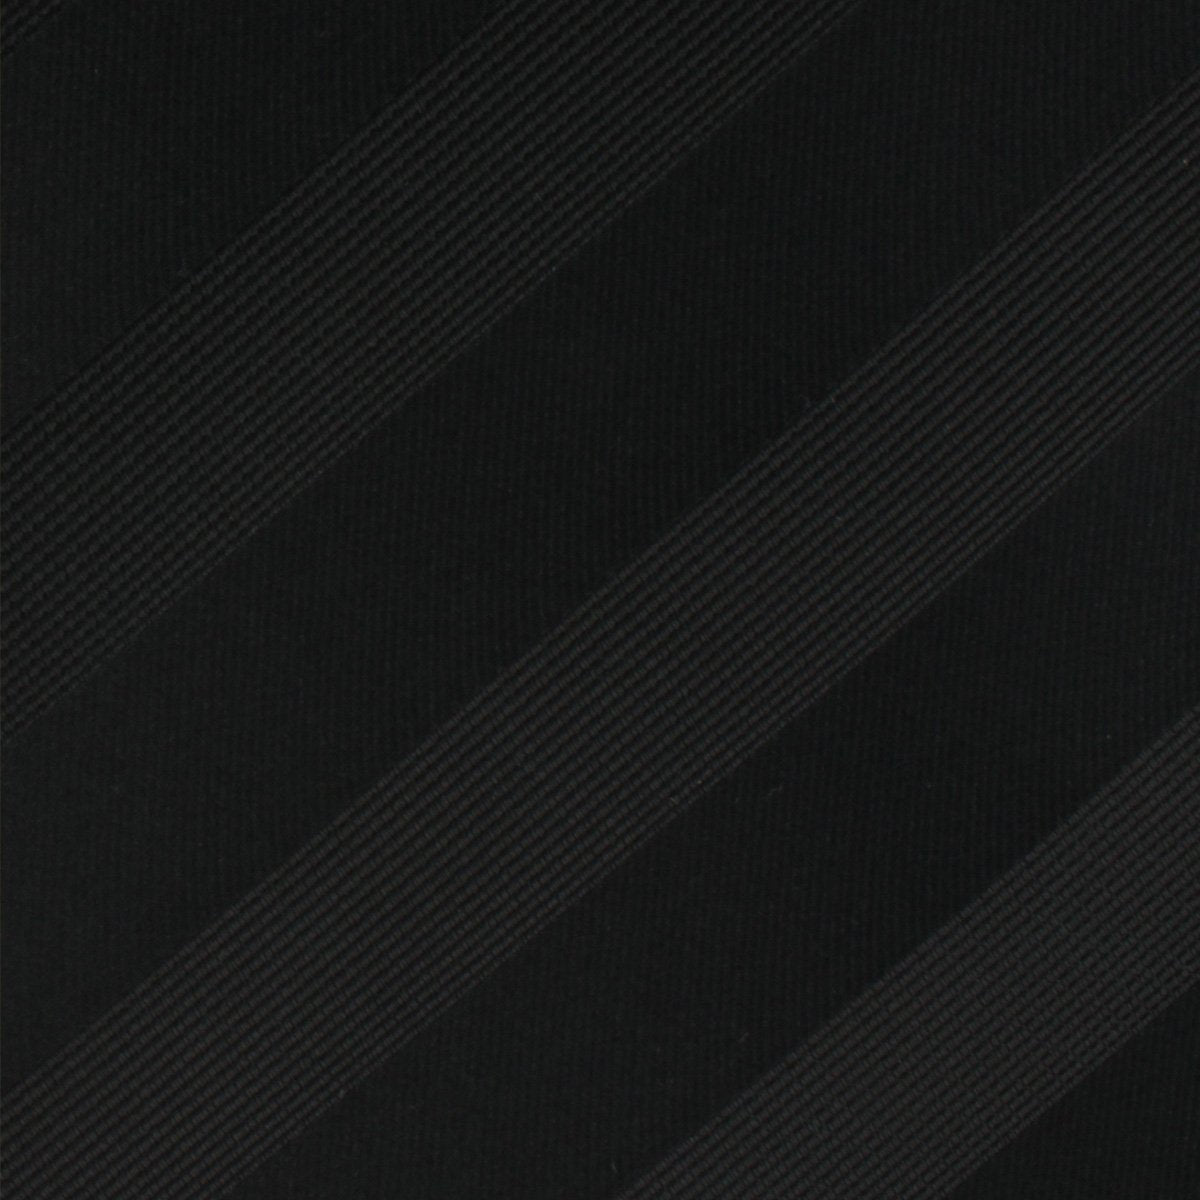 Sinatra Black Striped Necktie Fabric